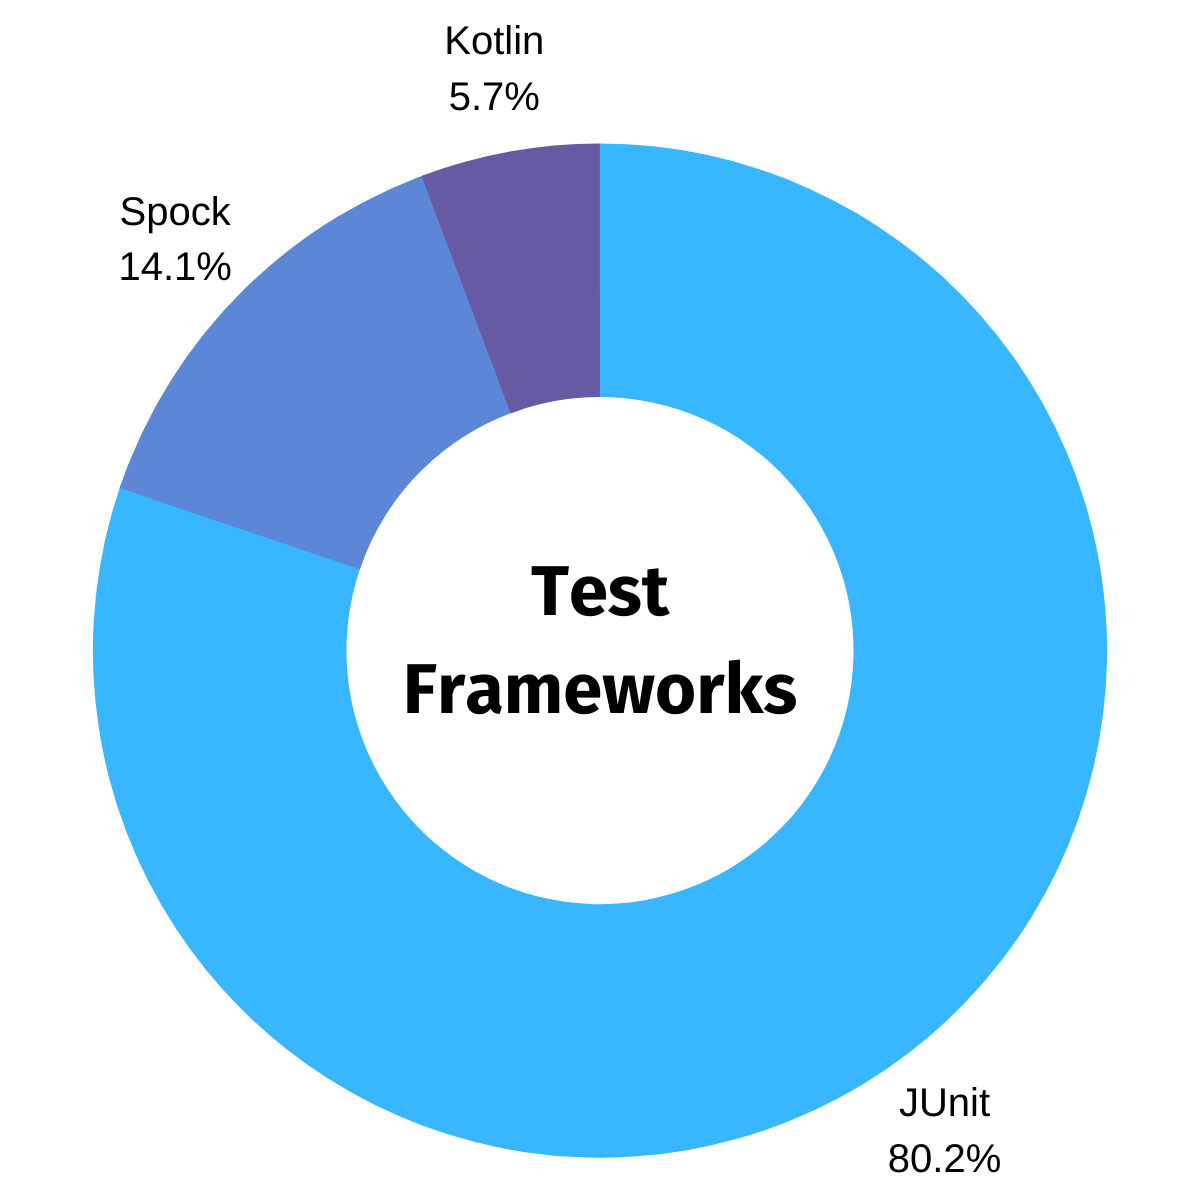 Test Frameworks